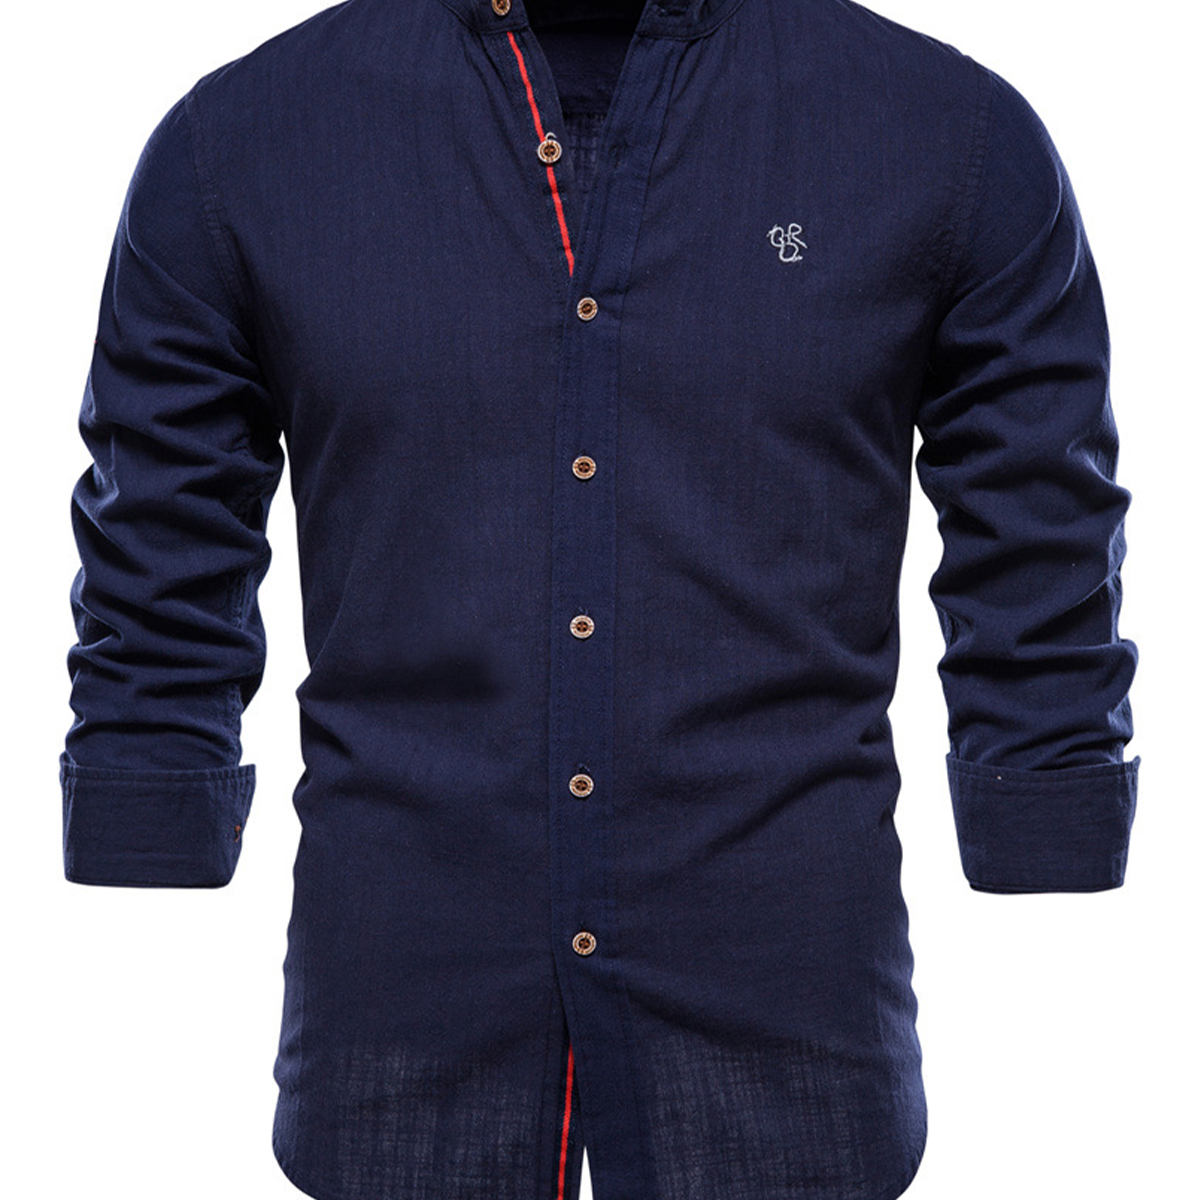 Men's Solid Color 100% Cotton Button Up Long Sleeve Shirt